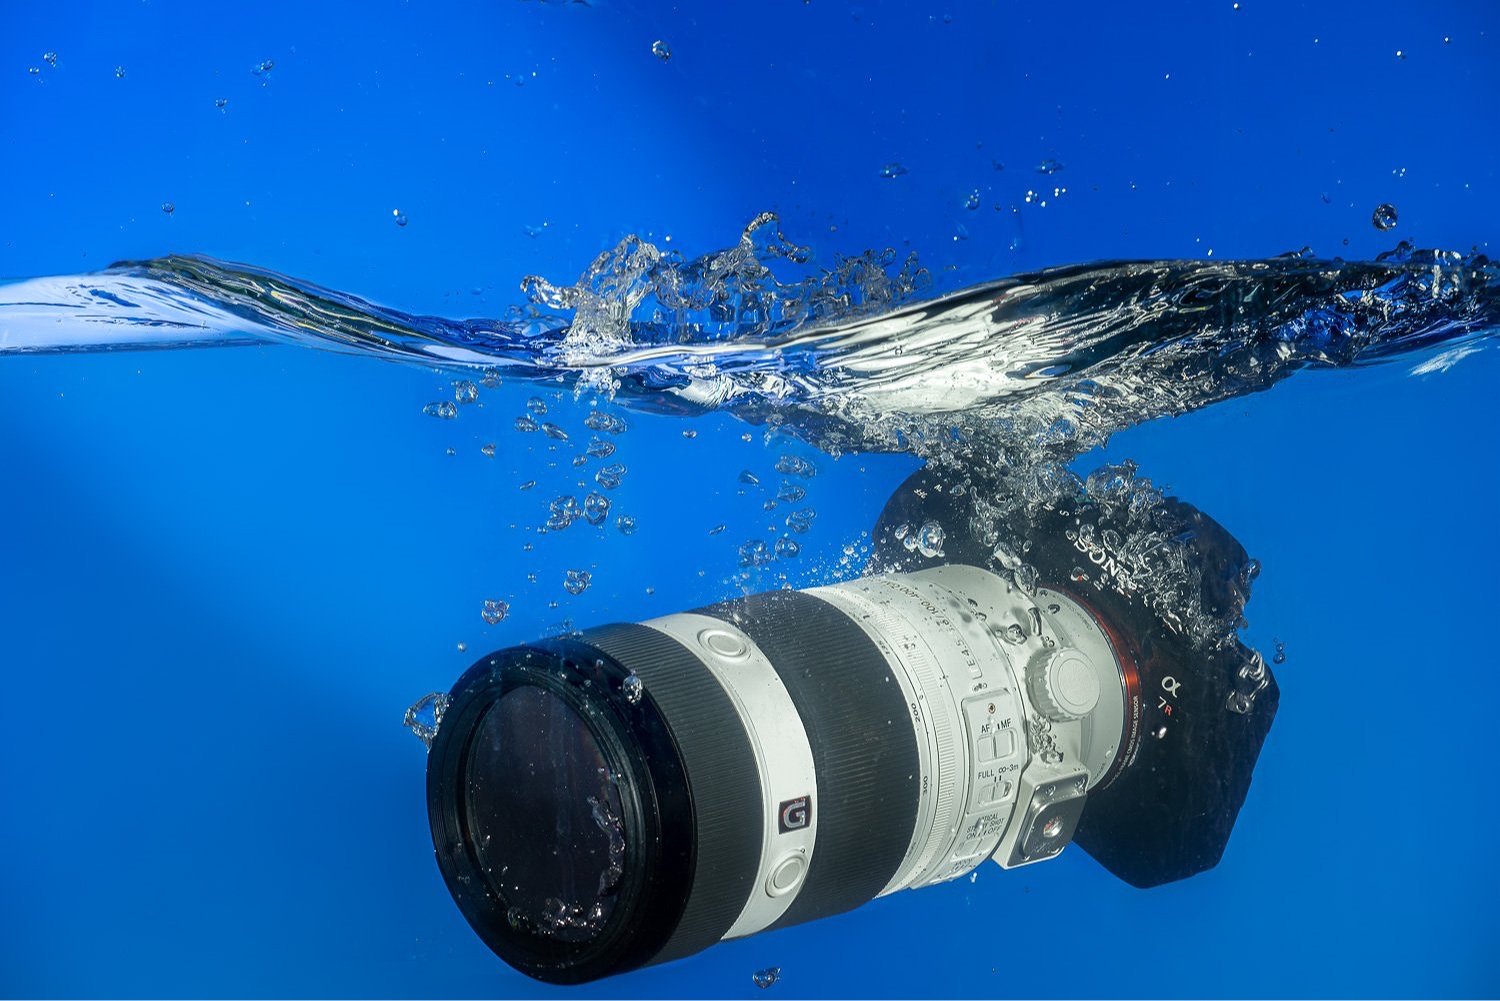 "Underwater Camera"